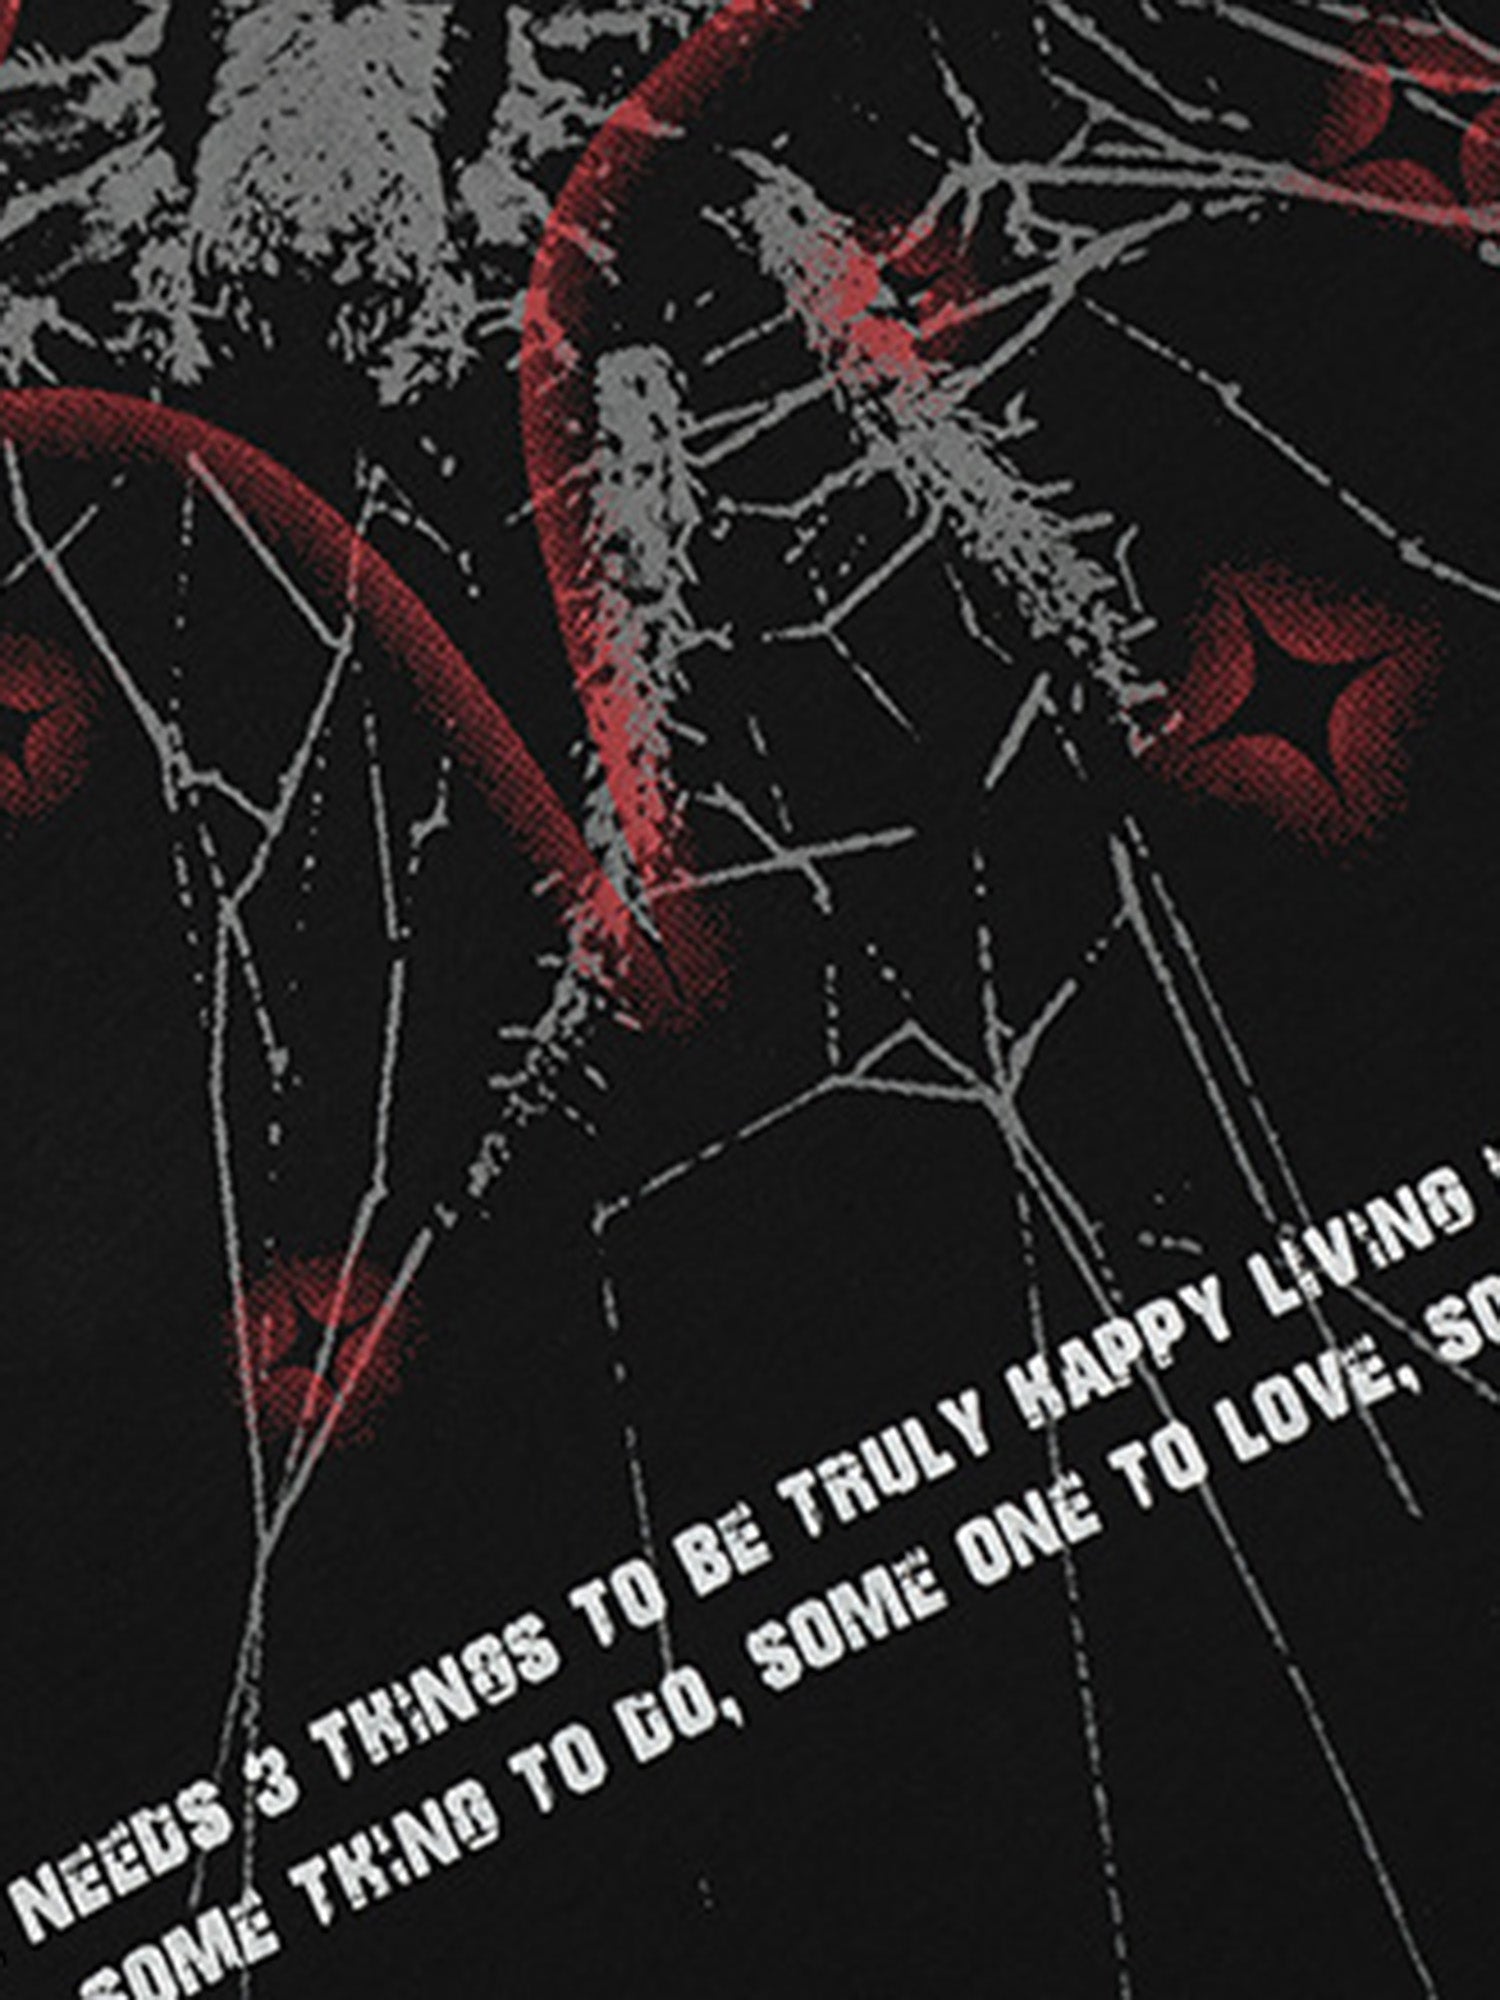 American Trendy Dark Spider Design Short-sleeved T-shirt